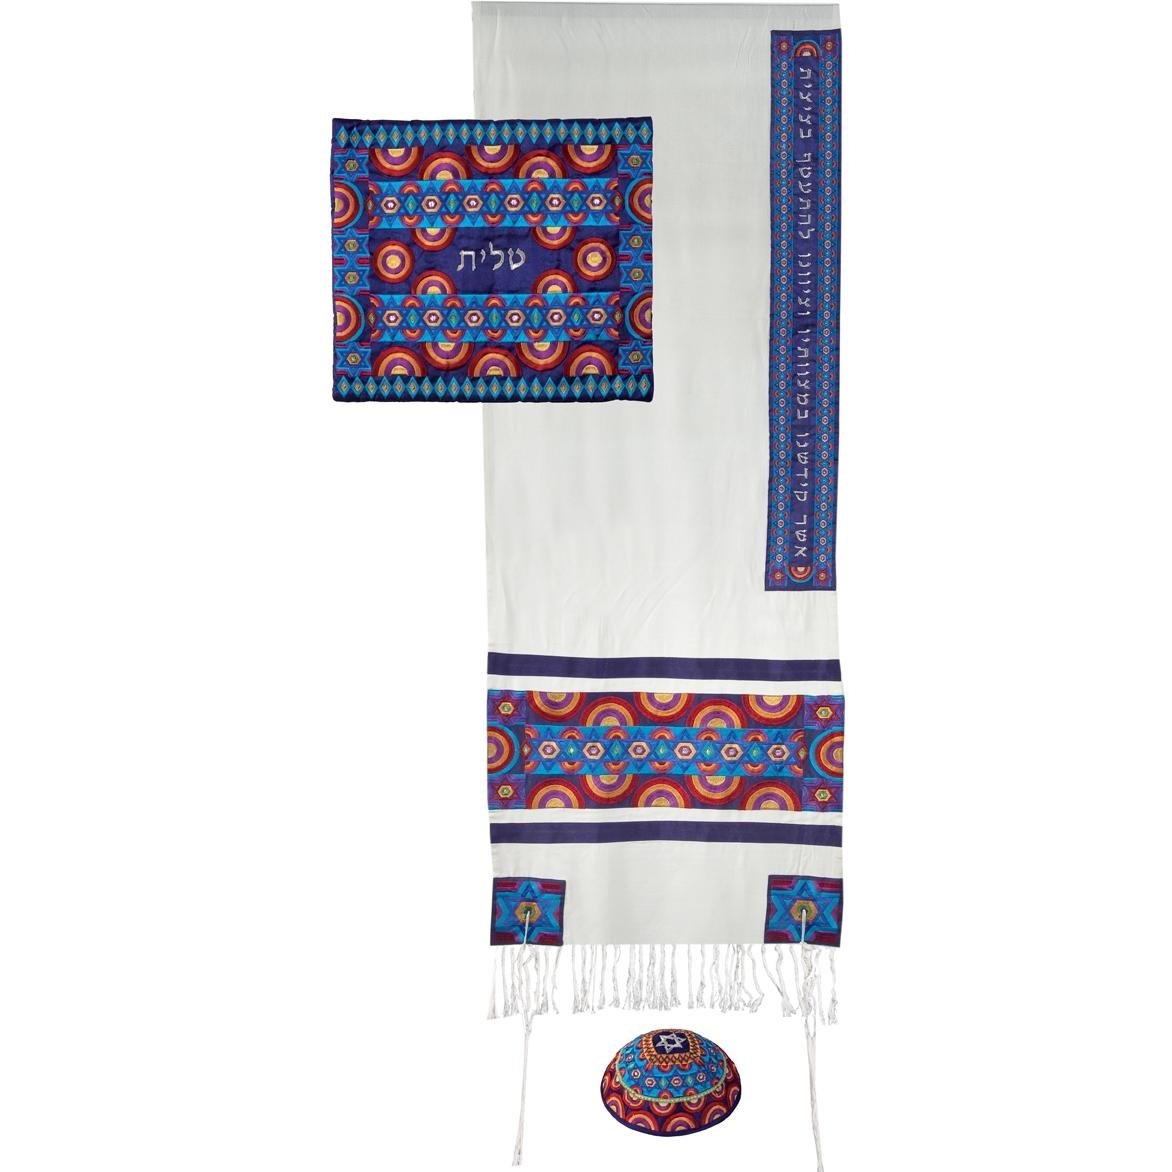 Yair Emanuel Multicolored Stars of David Embroidered Cotton & Raw Silk Tallit (Prayer Shawl) - 1